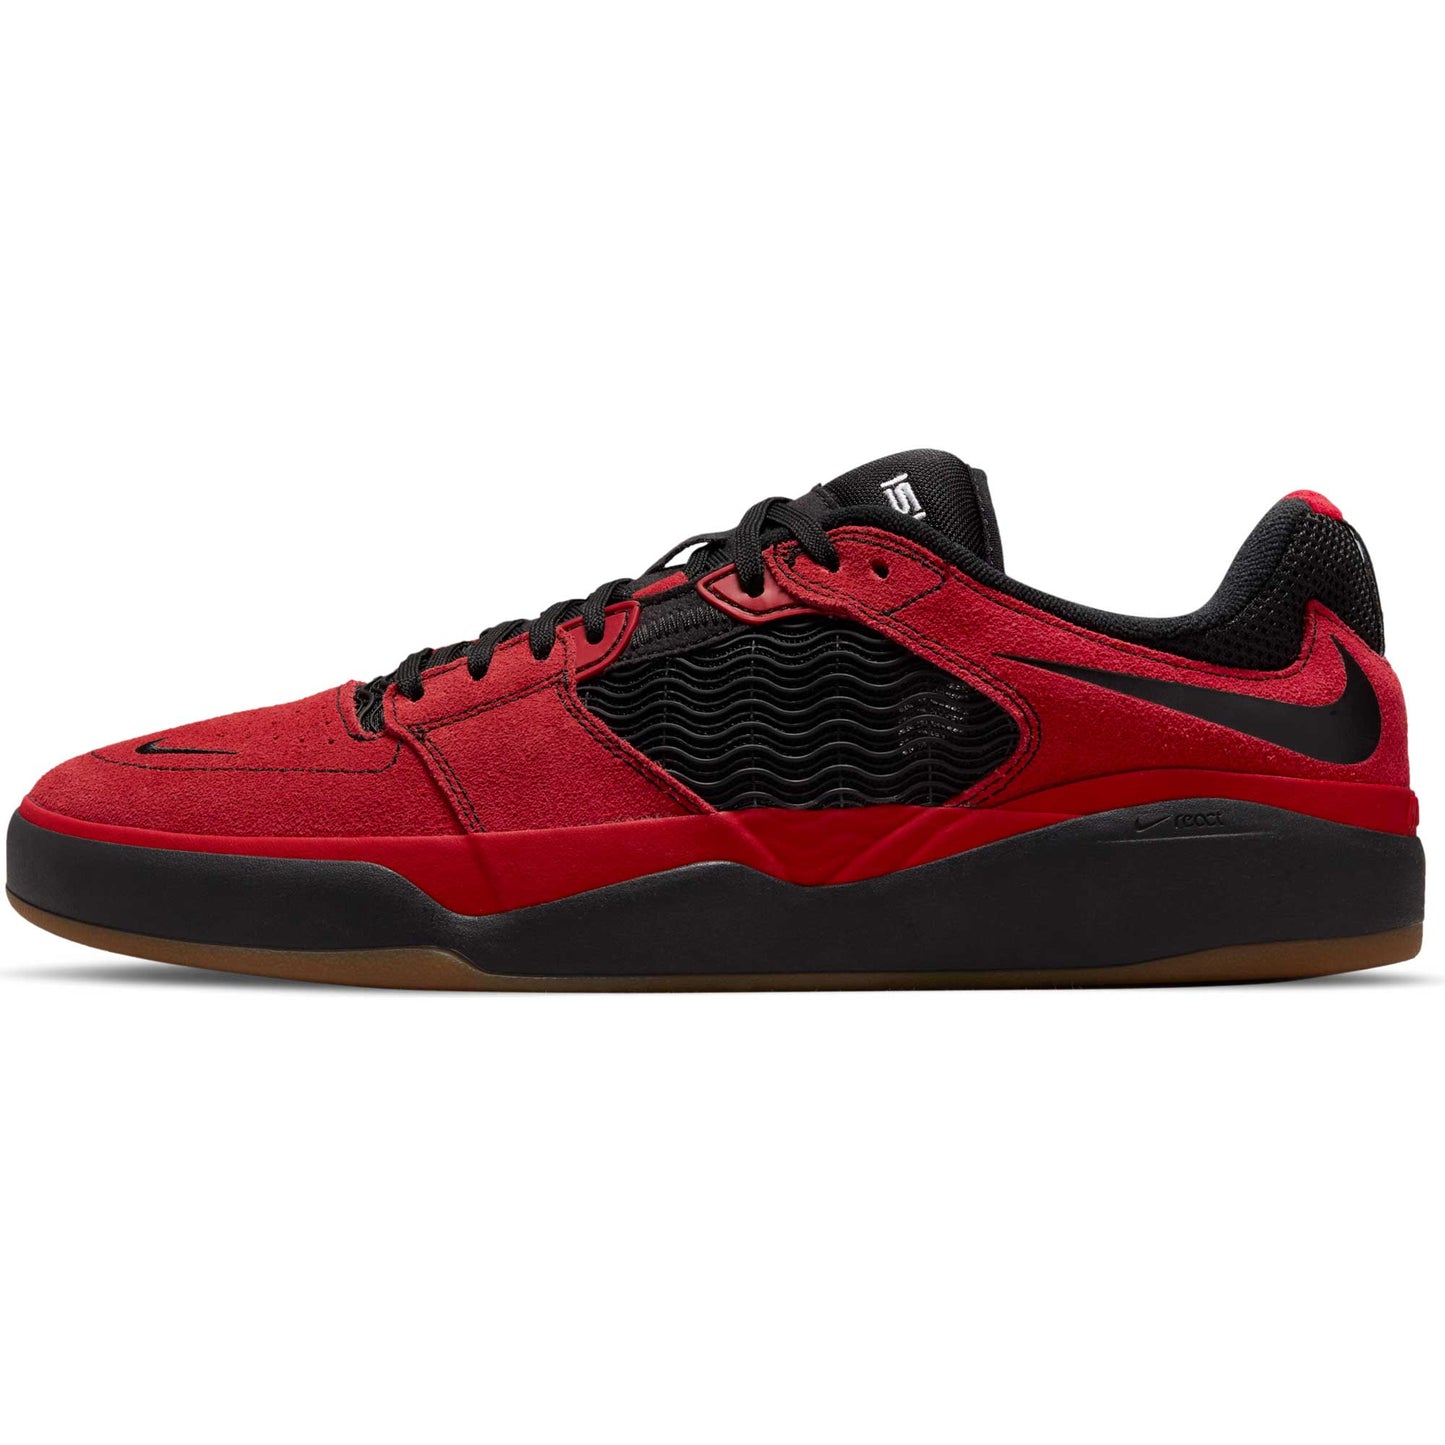 Nike SB Ishod Wair, varsity red/black-varsity red-white - Tiki Room Skateboards - 6